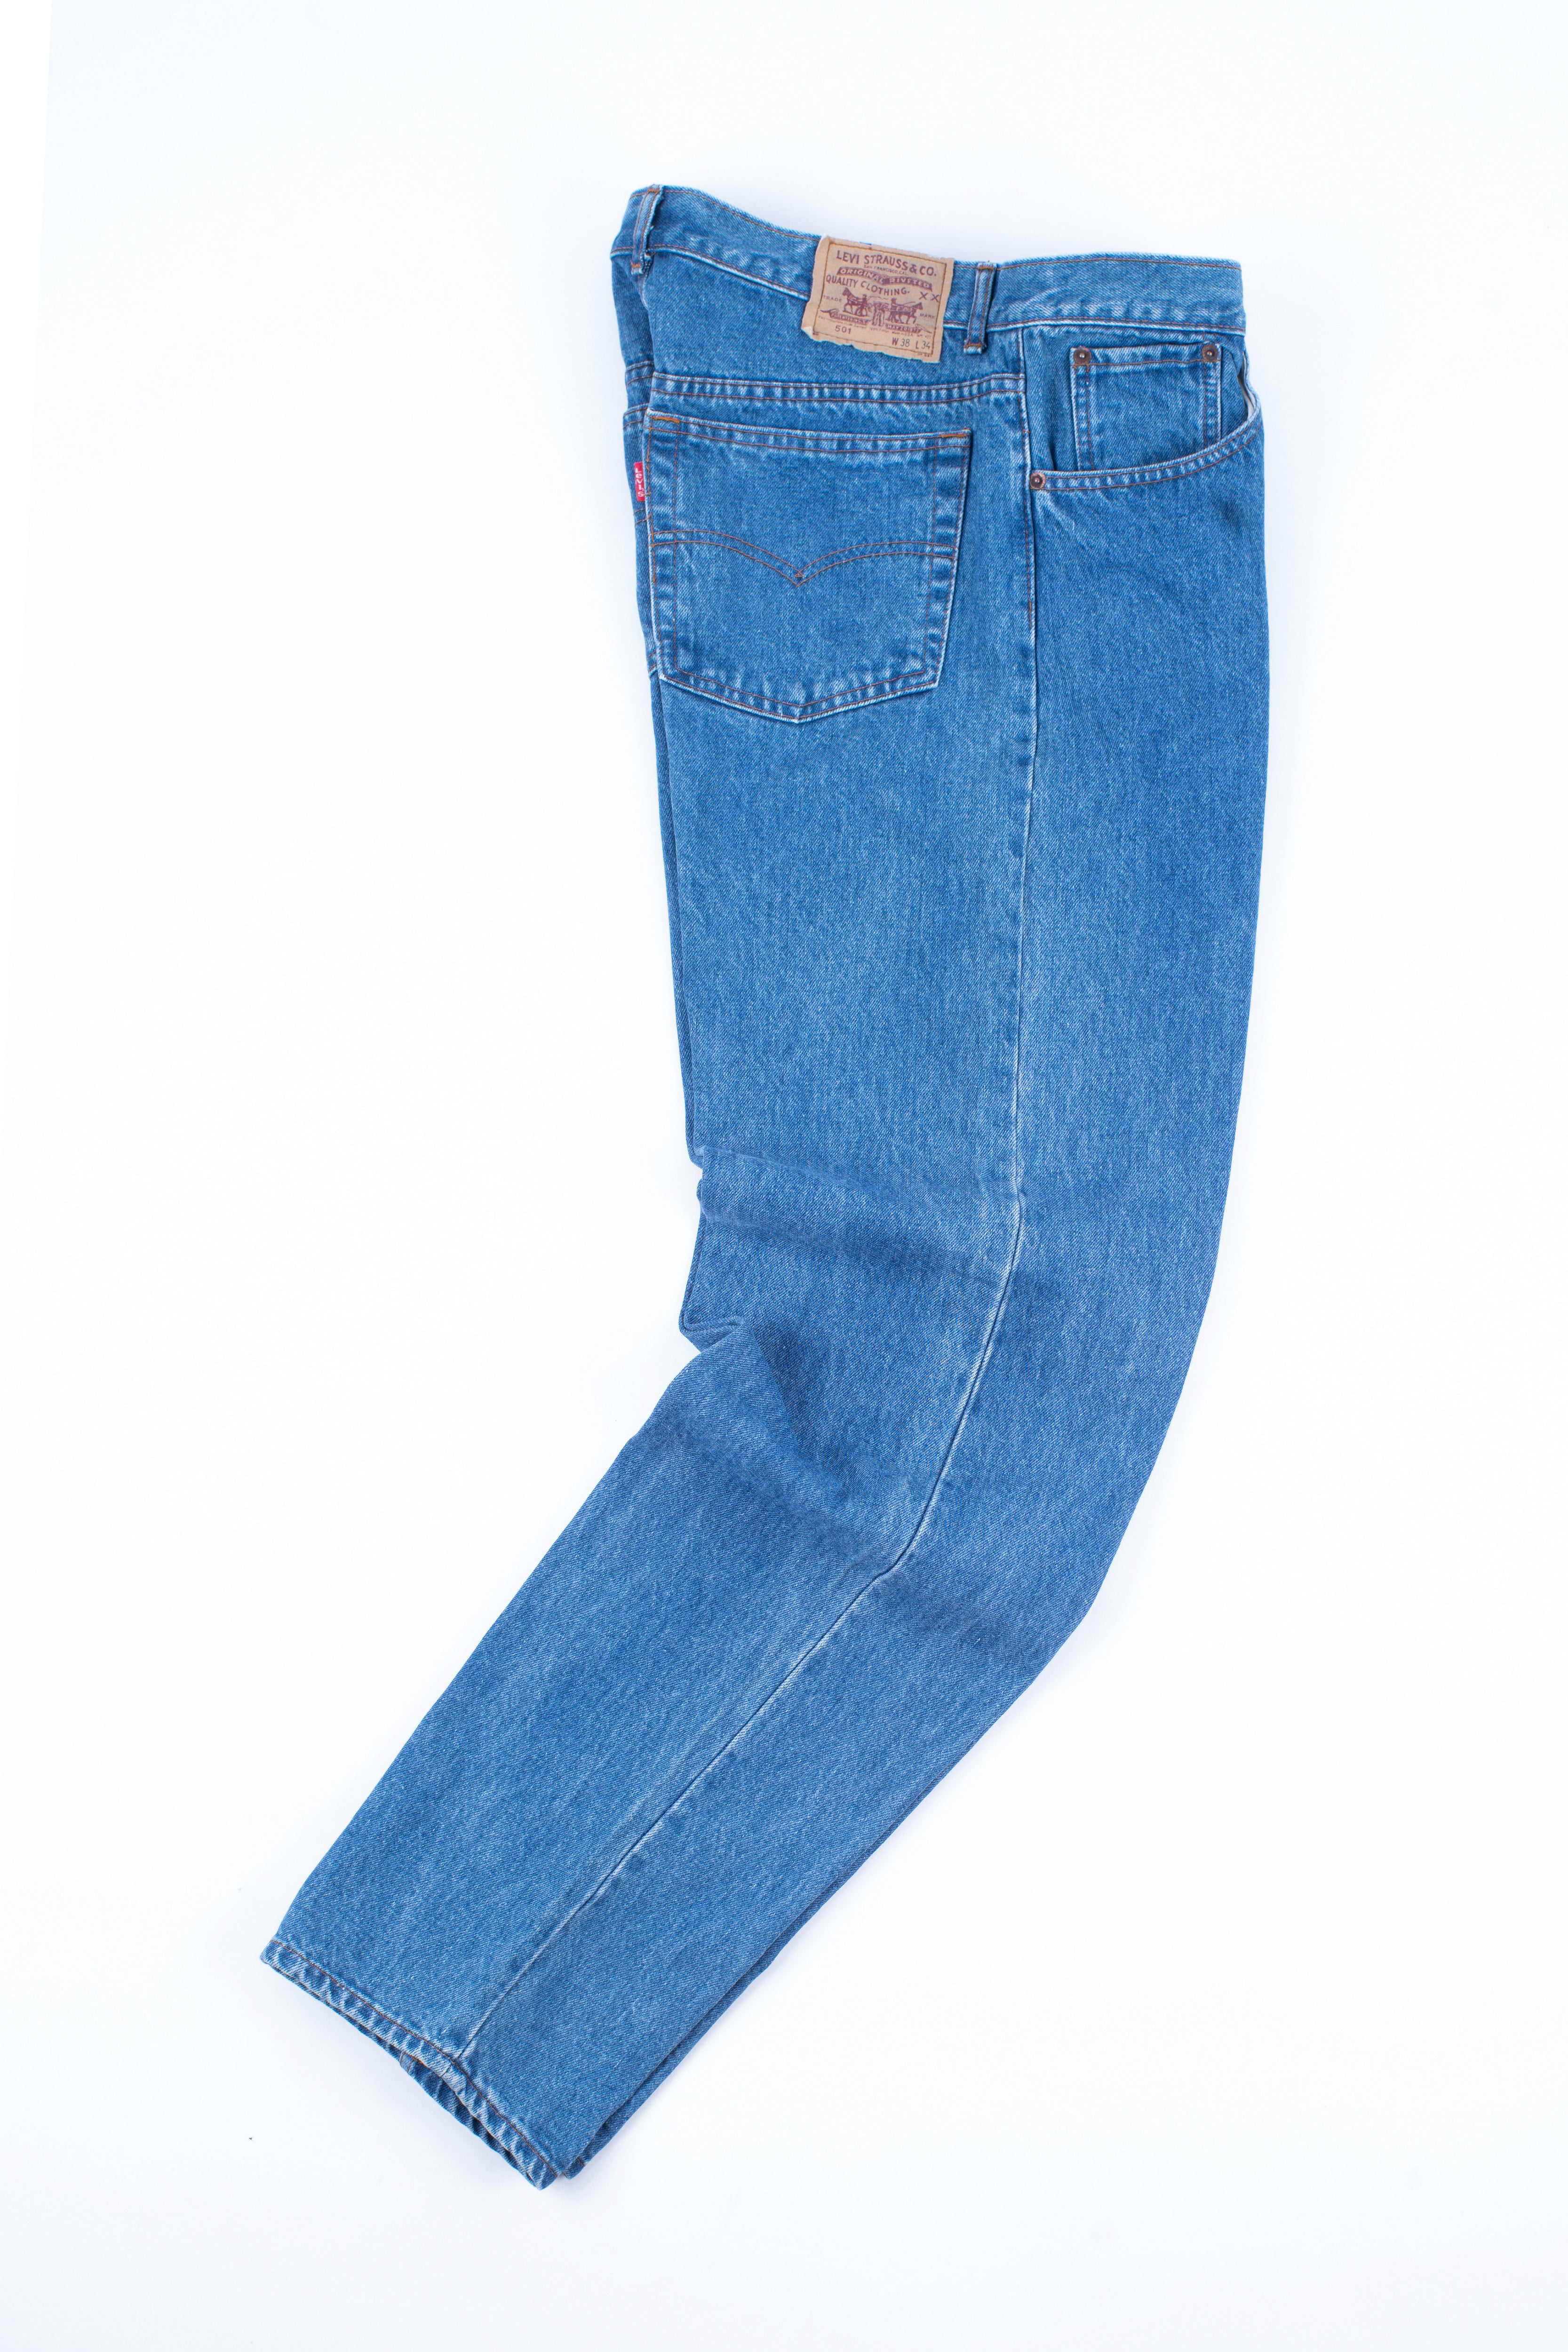 Levi’s 501 Men’s Vintage Blue Jeans Made in USA, W38/L34